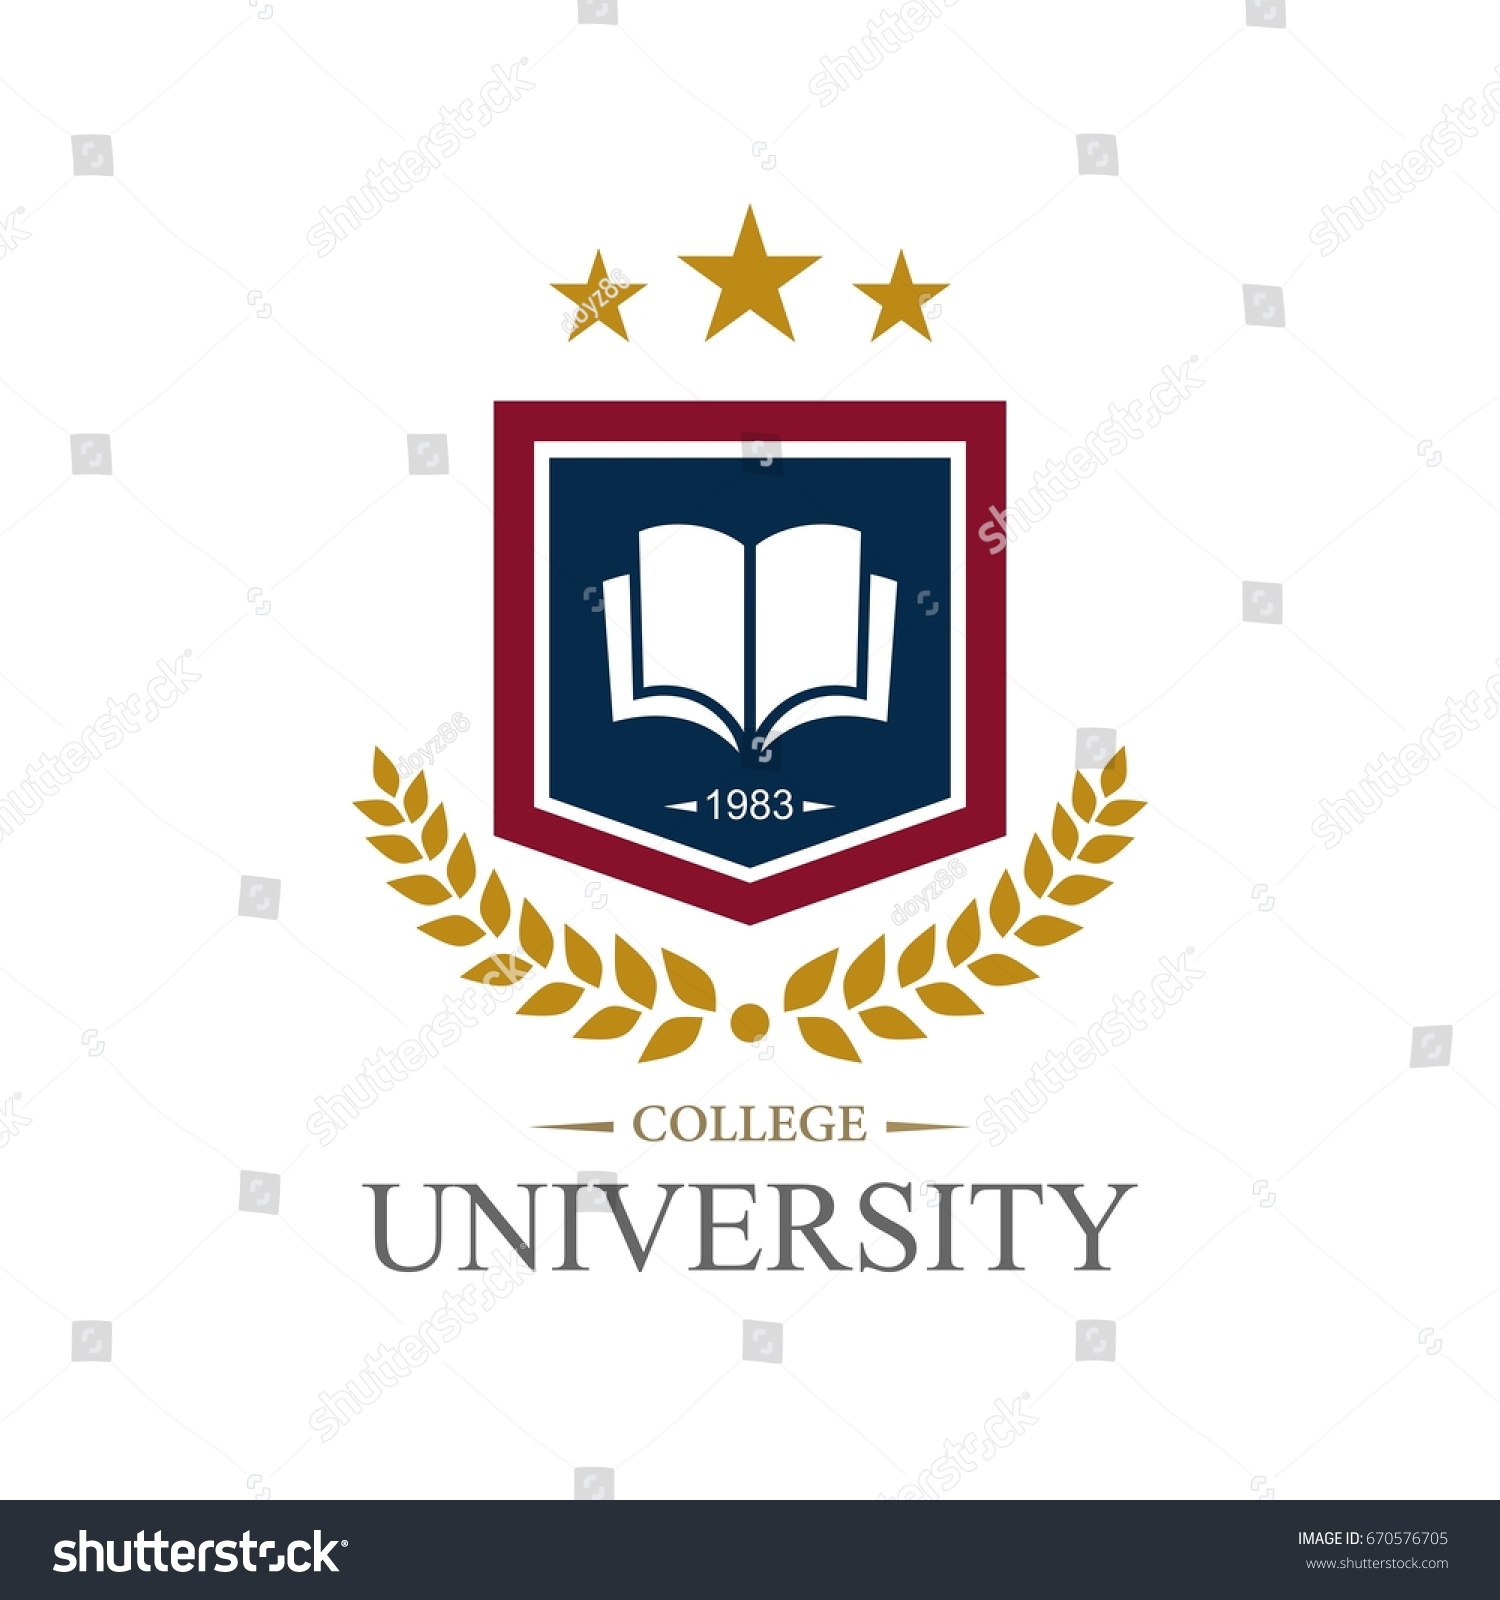 University Education Logo Design Stock Vector (Royalty Free) 670576705 ...